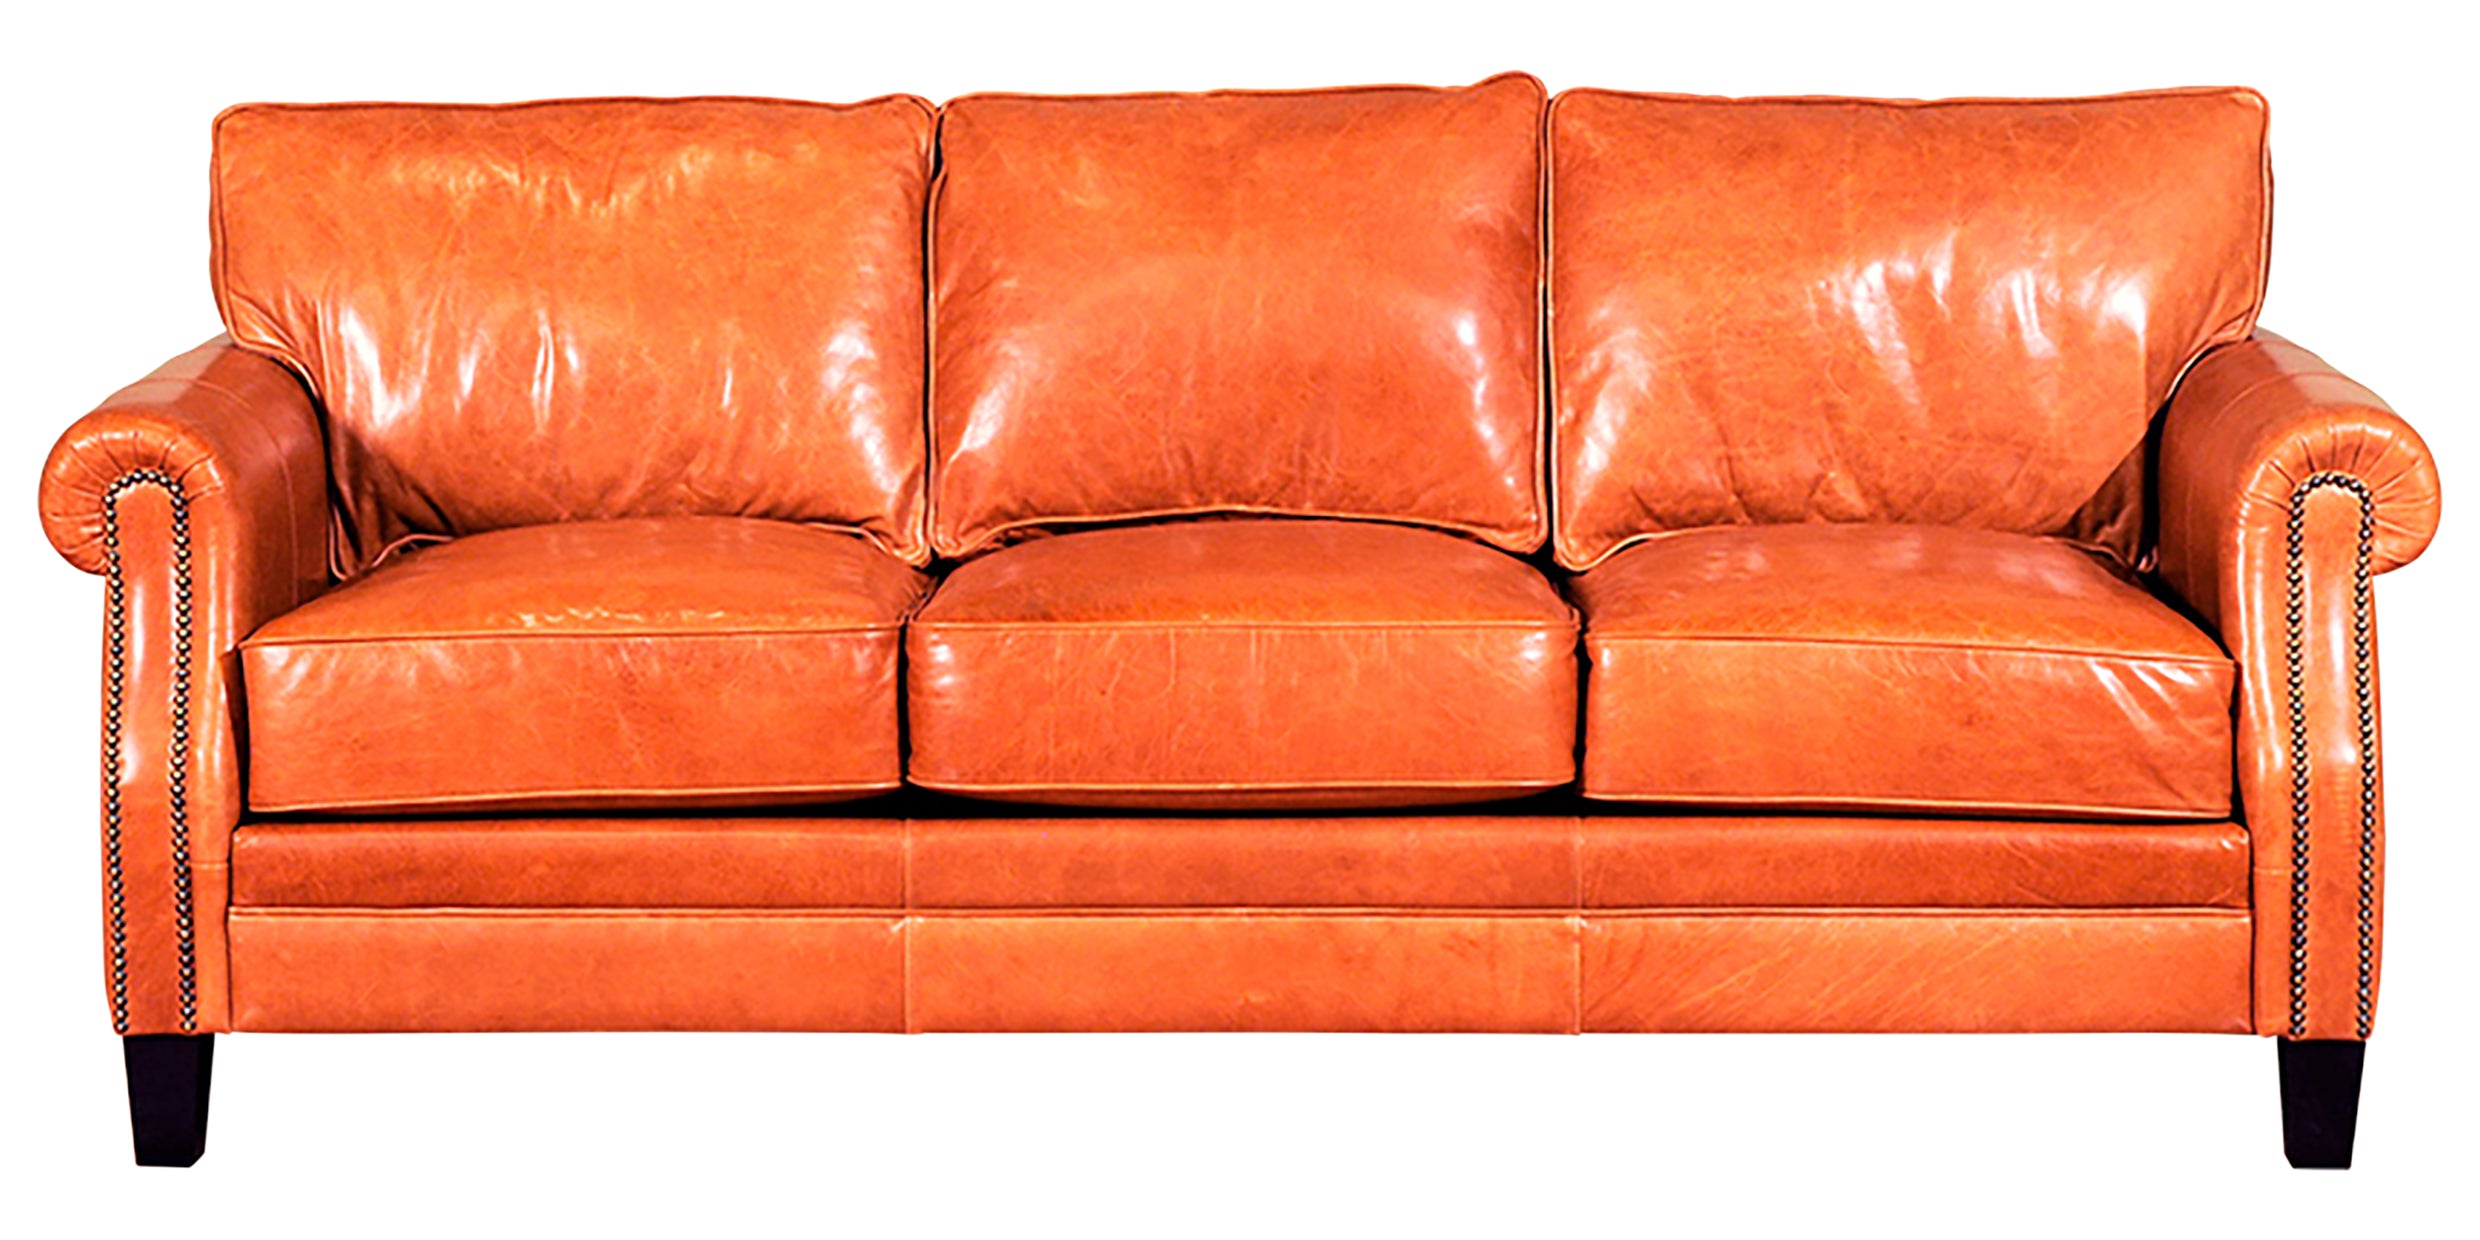 Sofa as Shown | Legacy Barton Sofa | Valley Ridge Furniture